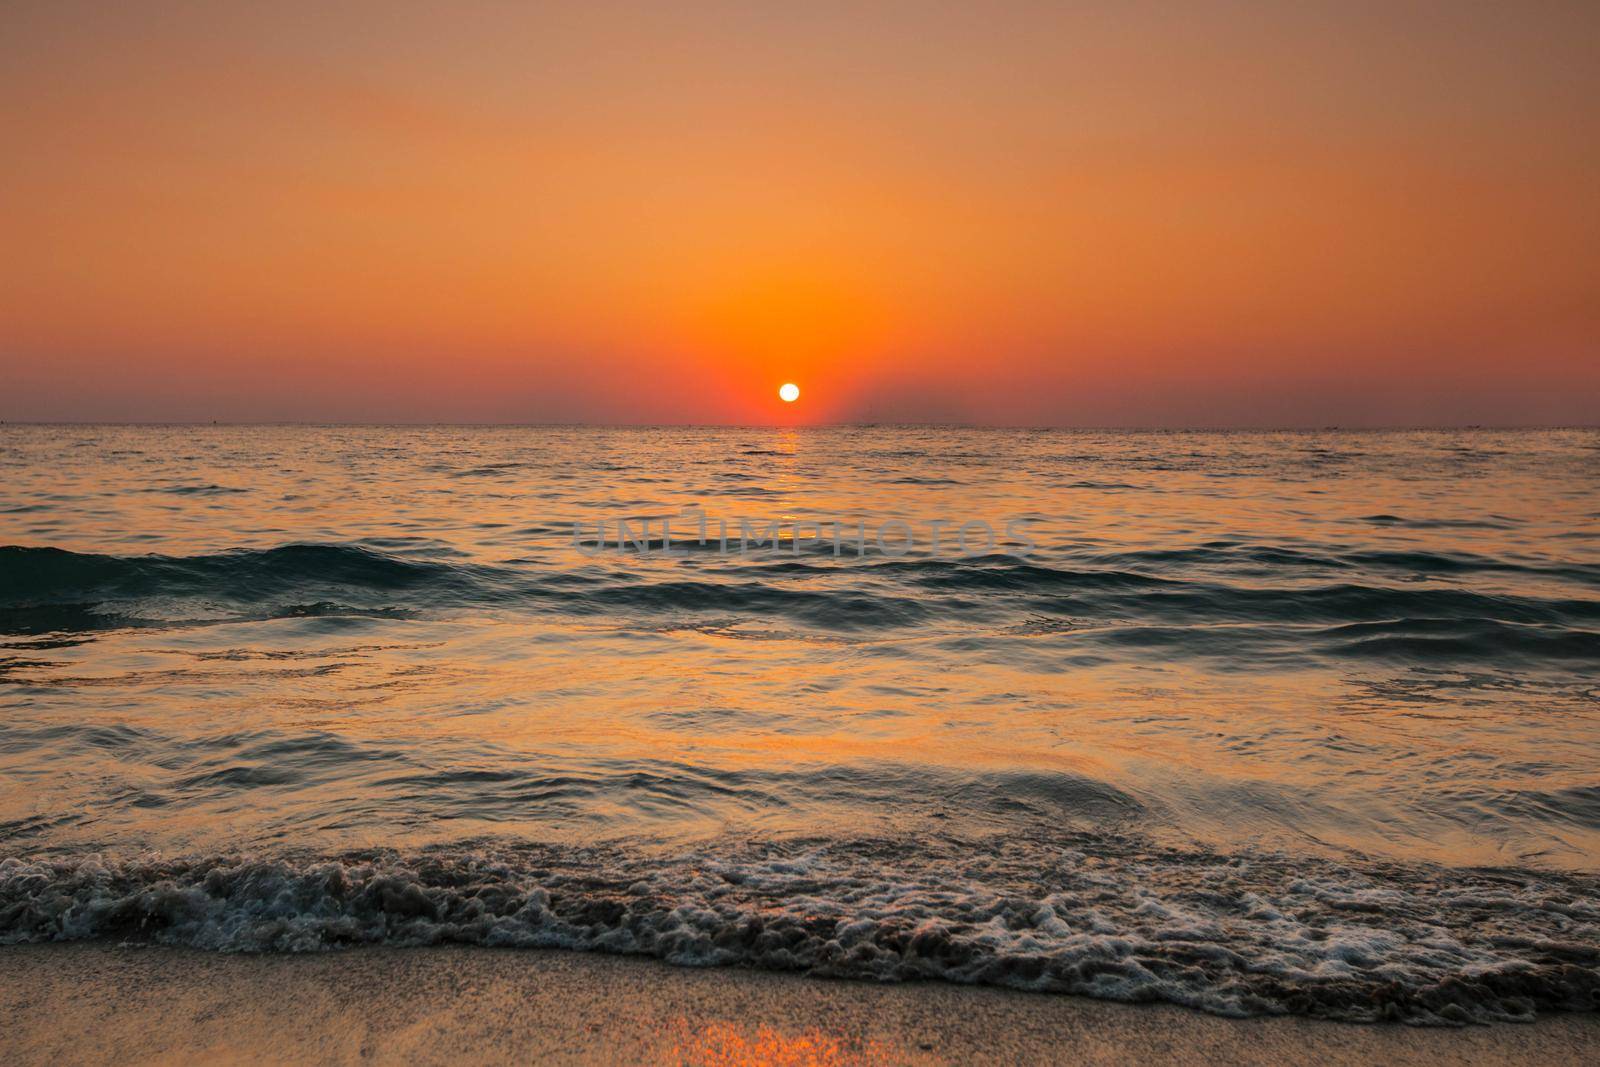 Beach and sea sunset by Yellowj